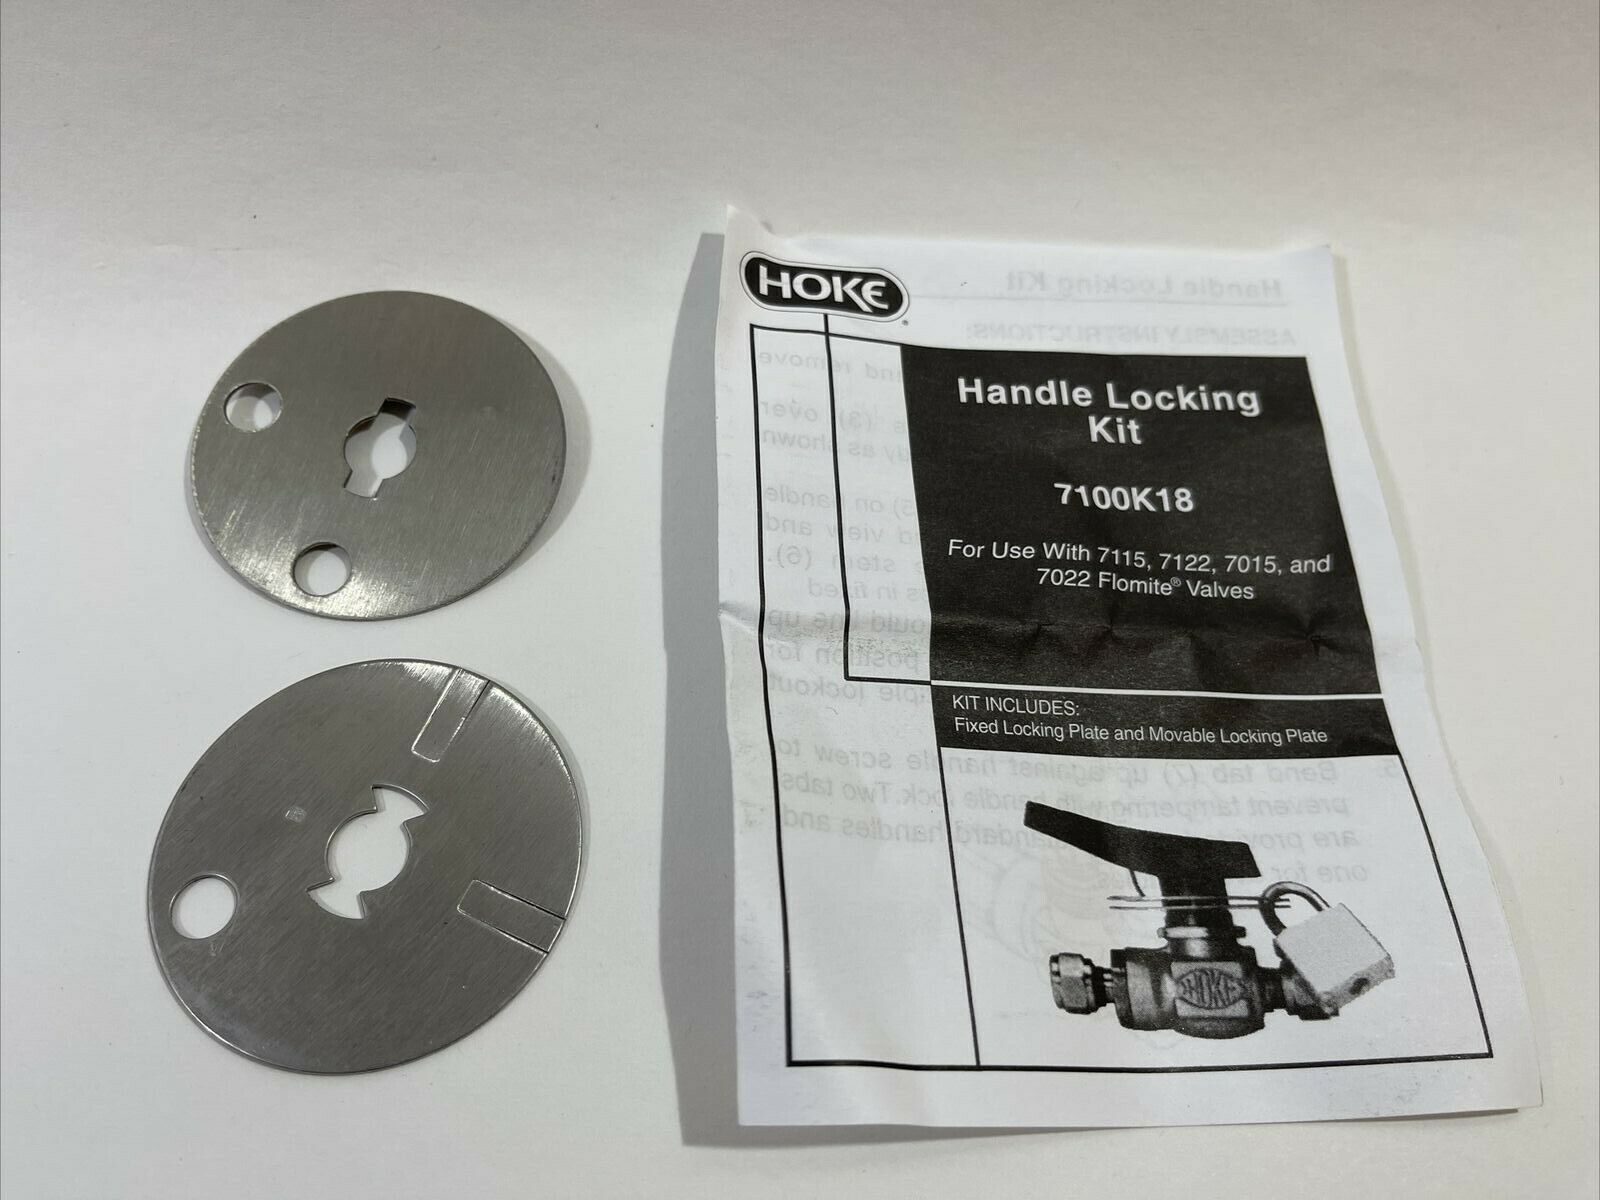 Hoke Handle Locking Kit 7100k18 Used With 7115, 7122, 7015, 7022 Flowmite Valves